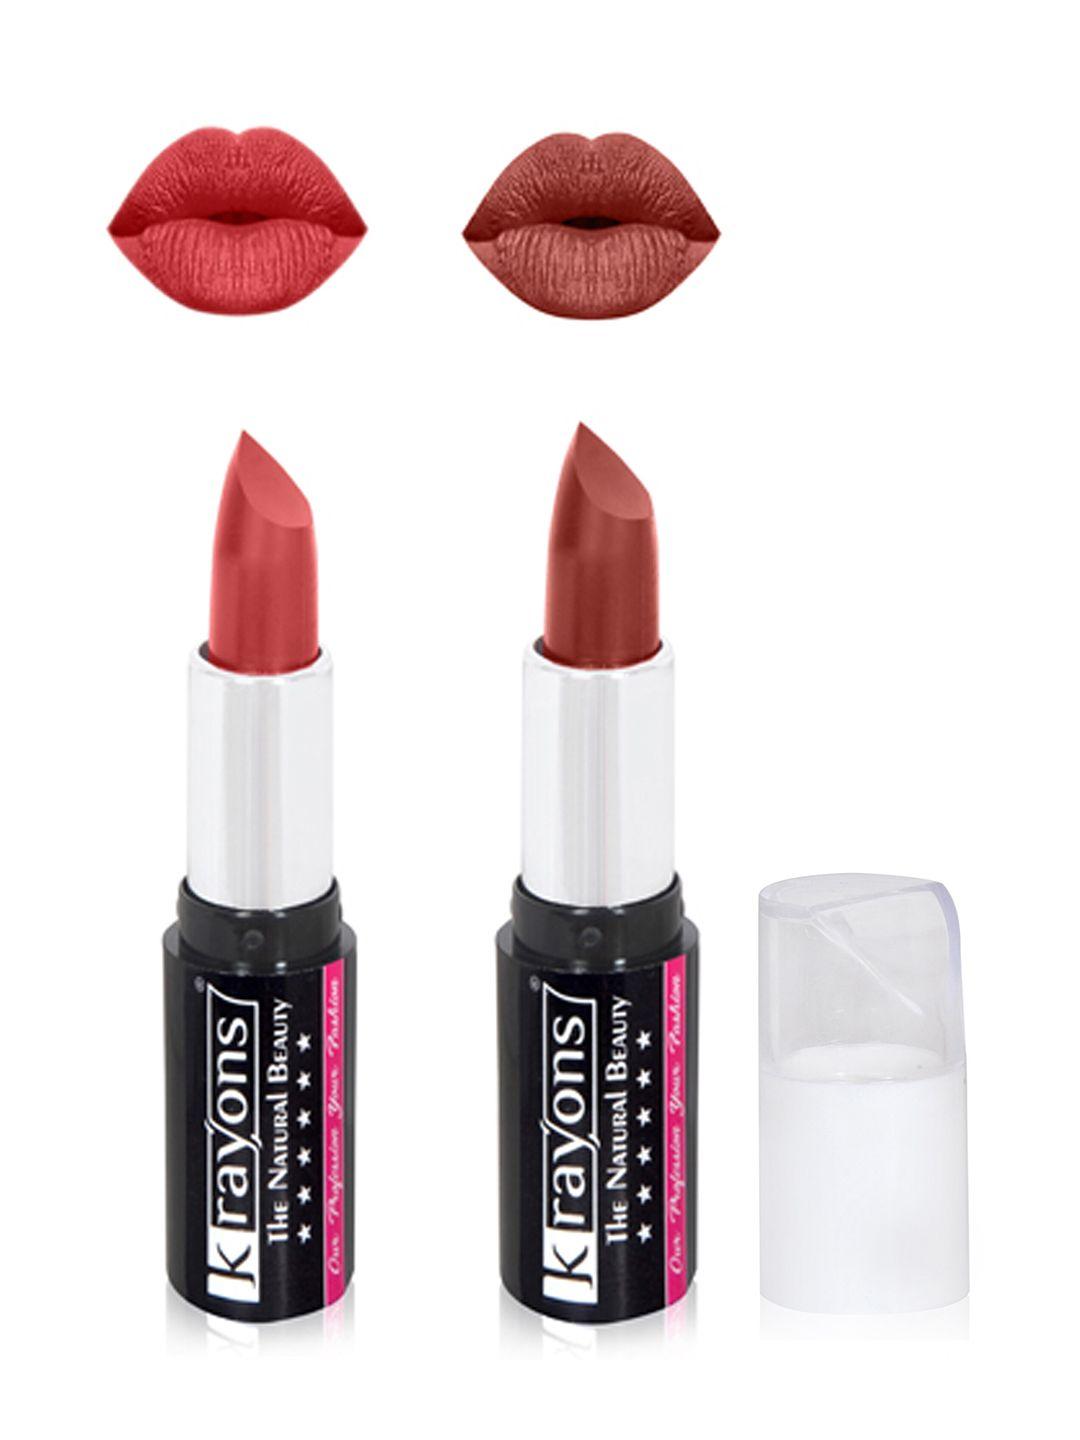 krayons set of 2 the natural beauty moisturizing & long-lasting matte lipstick - 4 g each